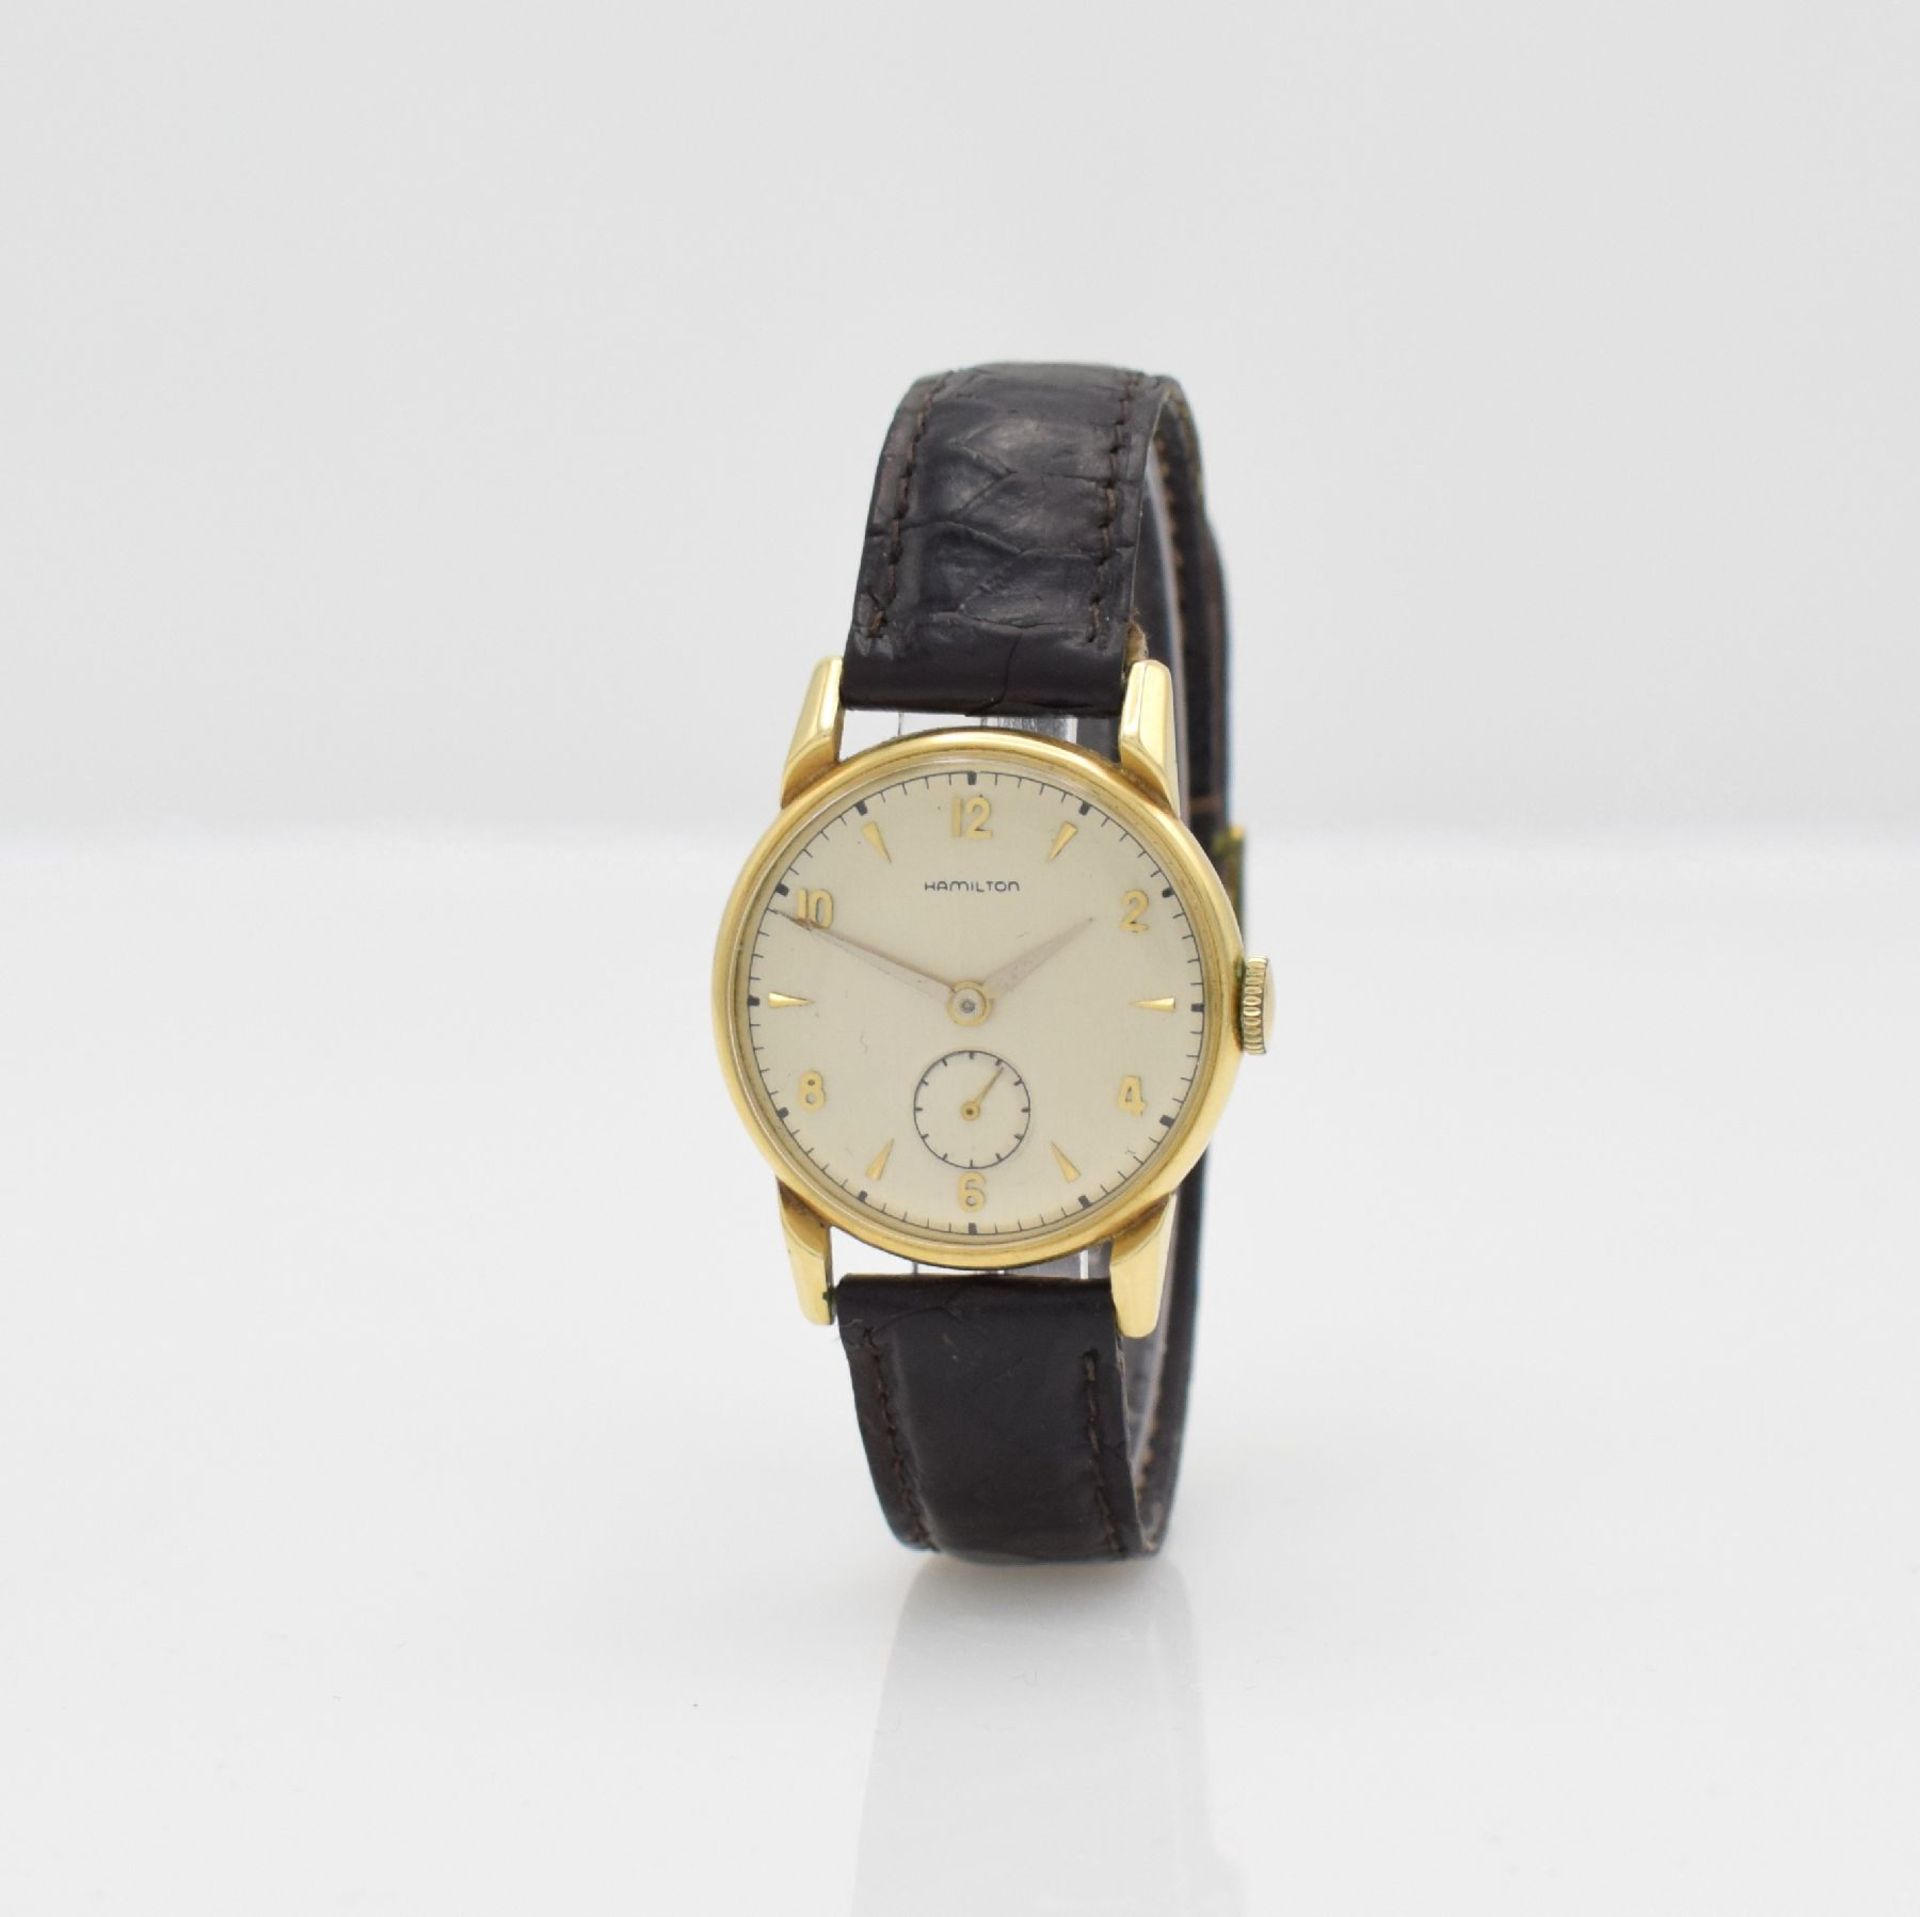 HAMILTON Armbanduhr in GG 585/000, USA um 1947, - Bild 3 aus 7